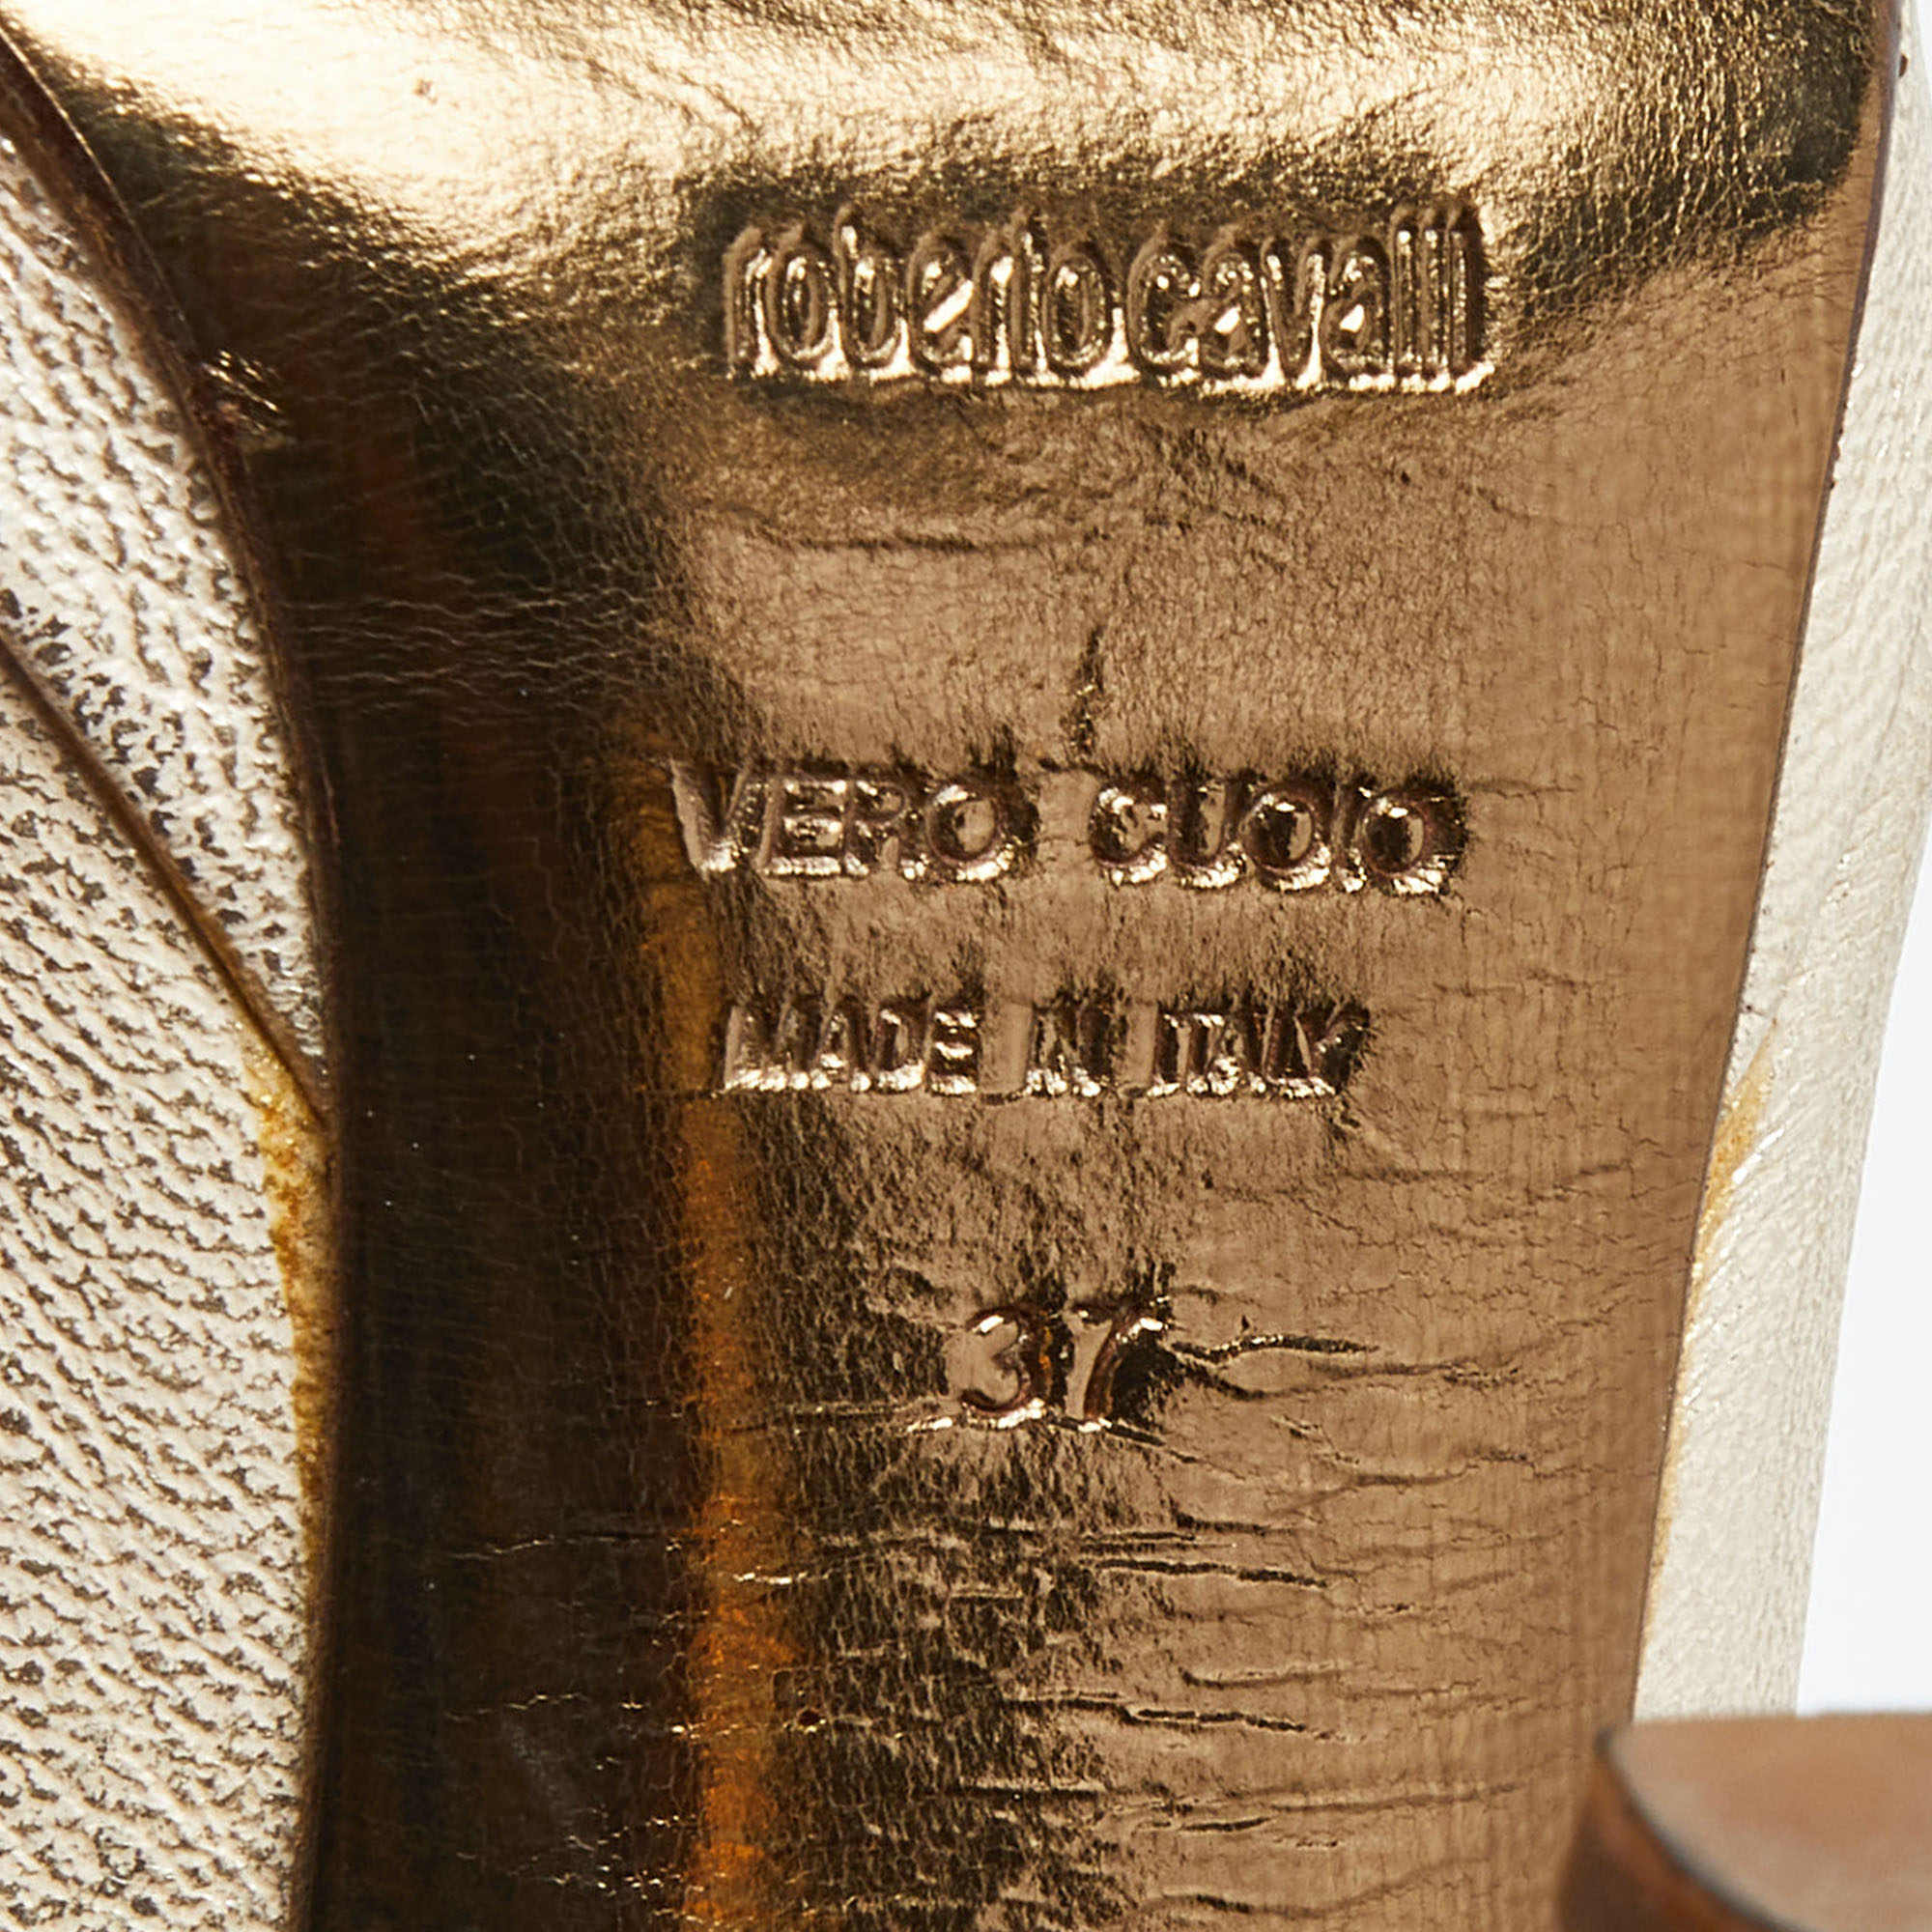 Roberto Cavalli Metallic Gold Leather Peep Toe Pumps Size 37